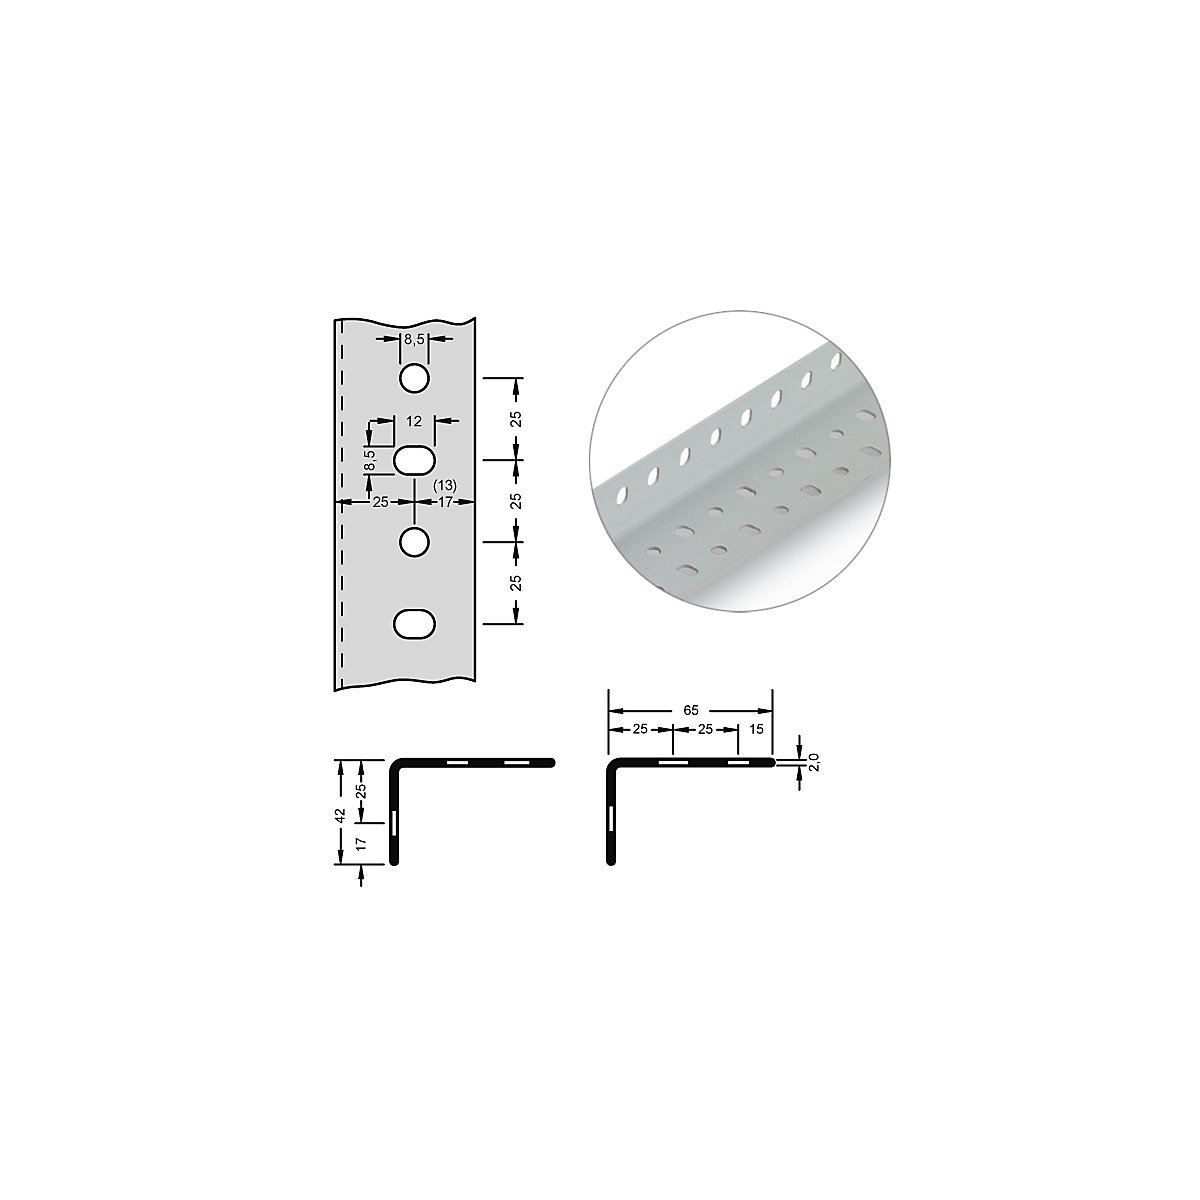 Stahl-Winkelprofil für Baukastensystem hofe, 65 x 42 x 2 mm, Länge 2 m, lichtgrau, VE 10 Stk